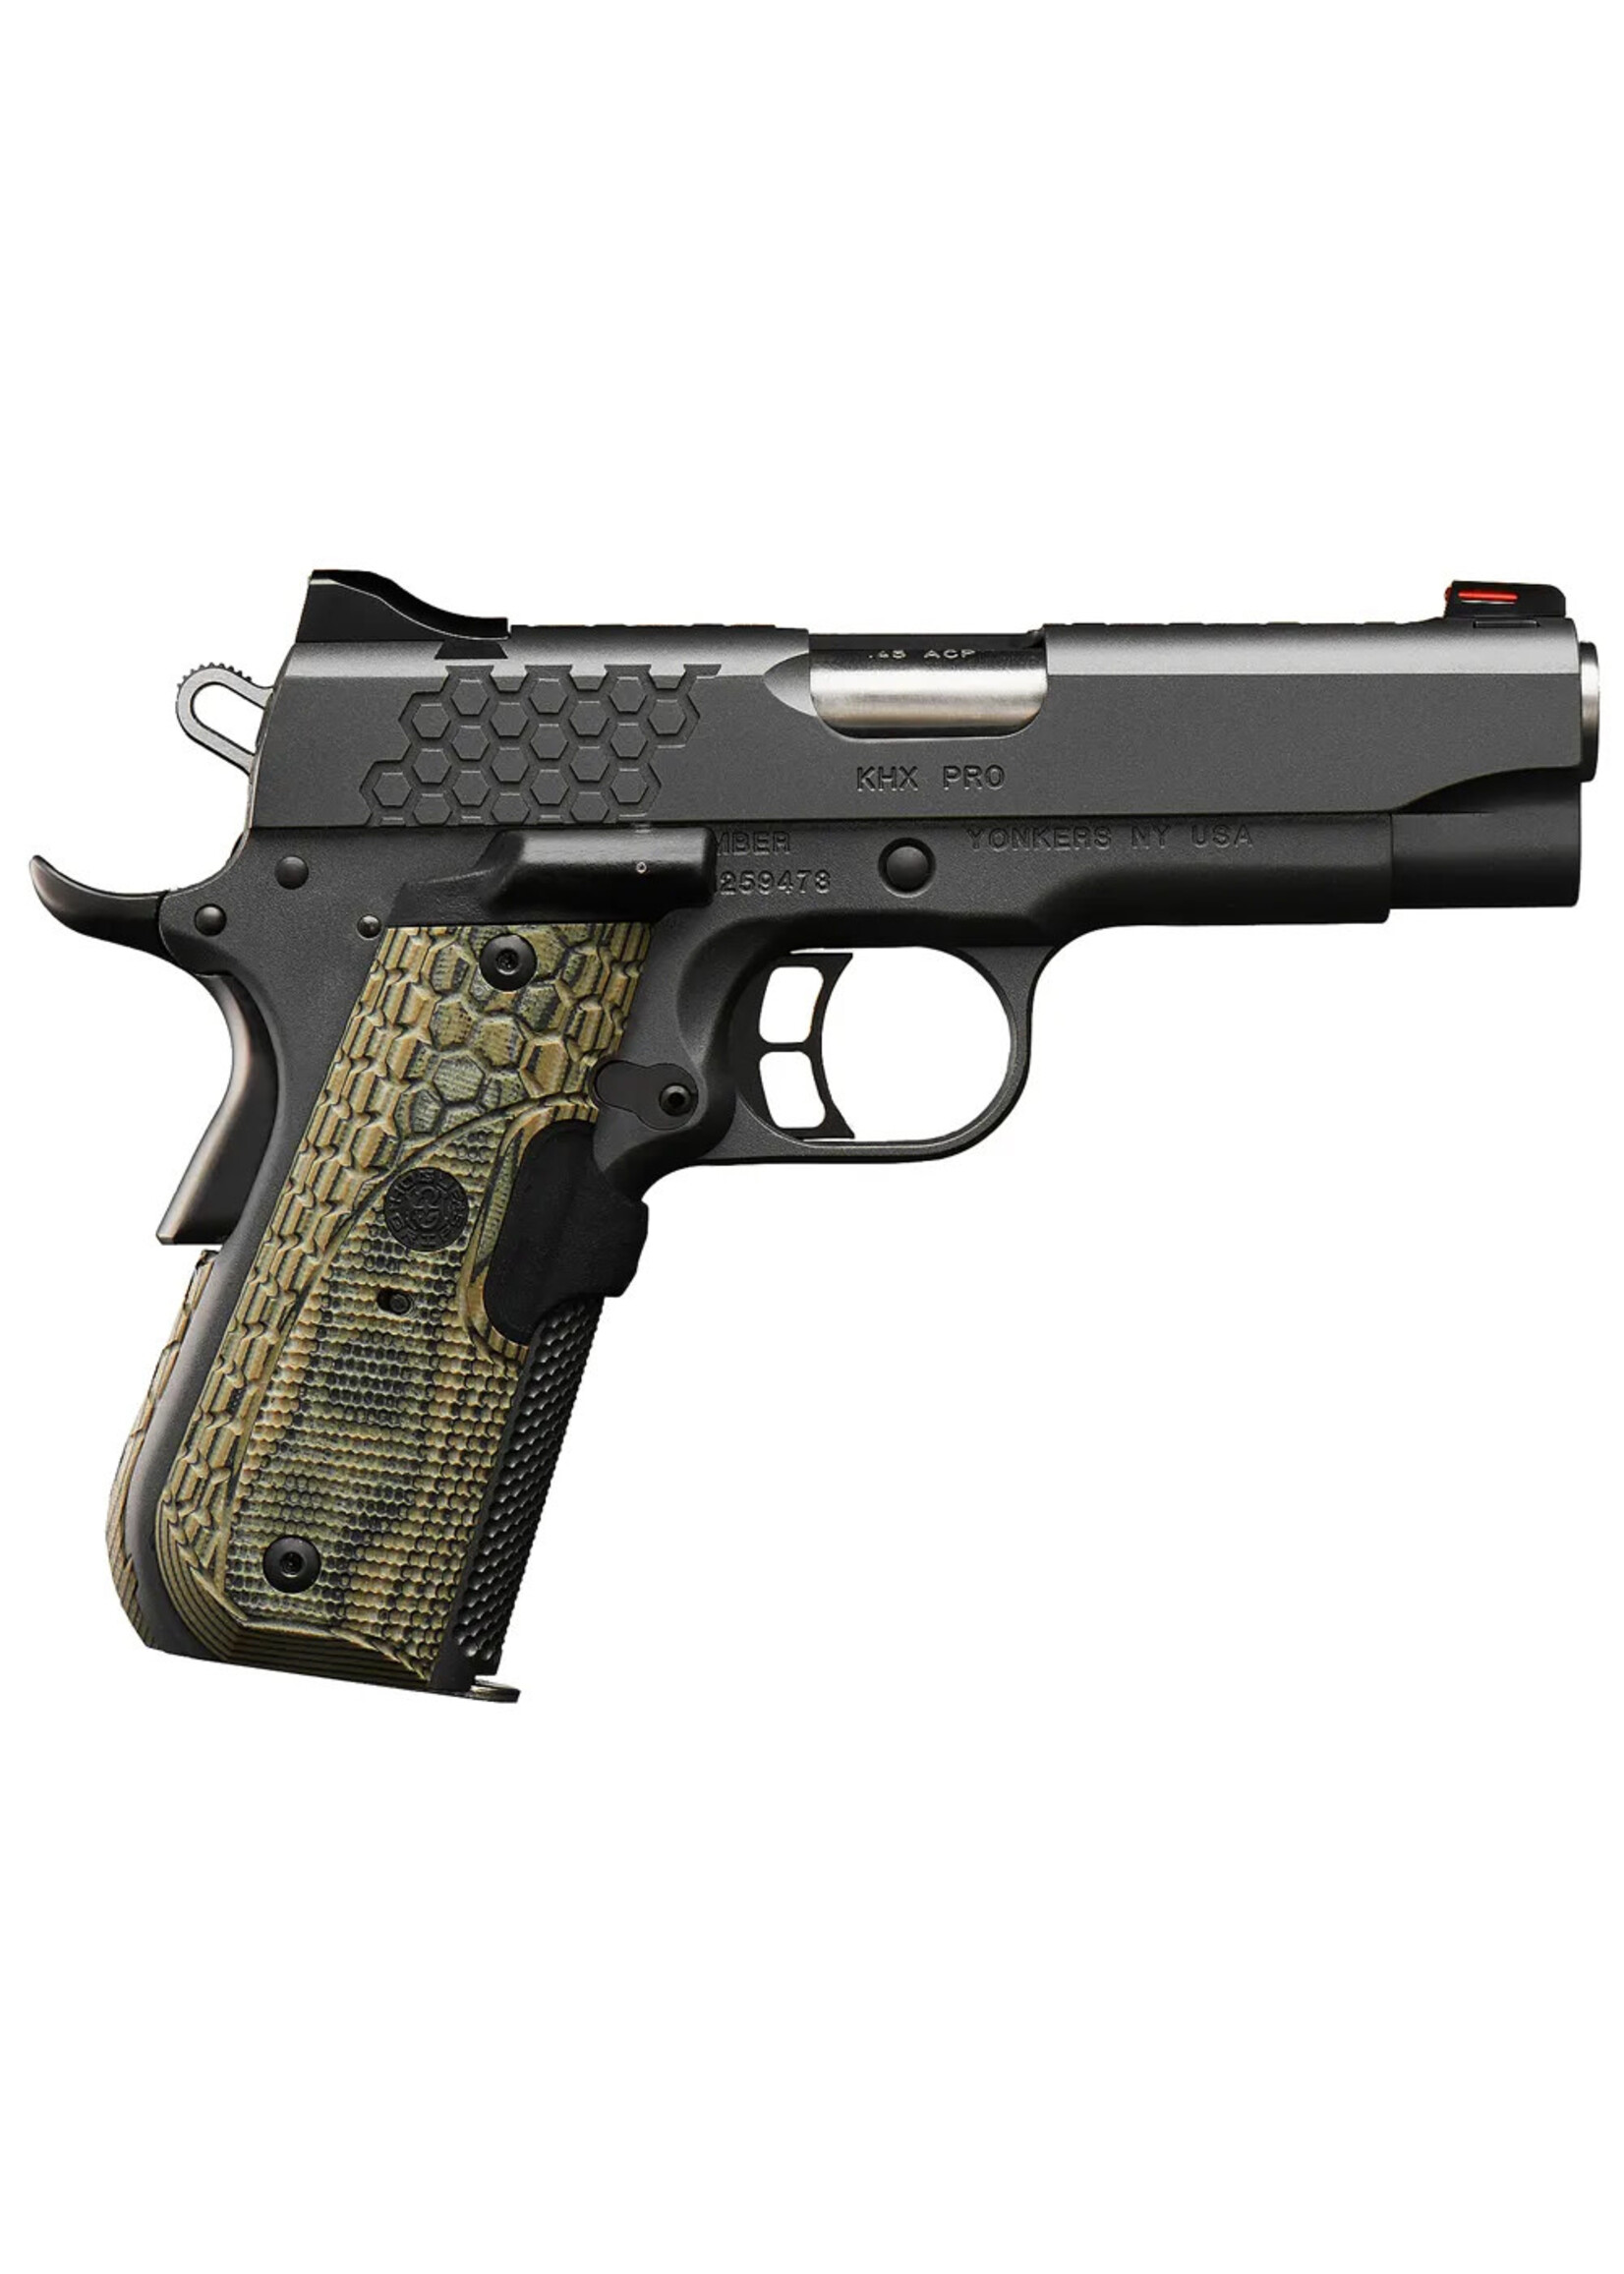 Kimber Kimber 9mm KHX Pro Pistol 3000363